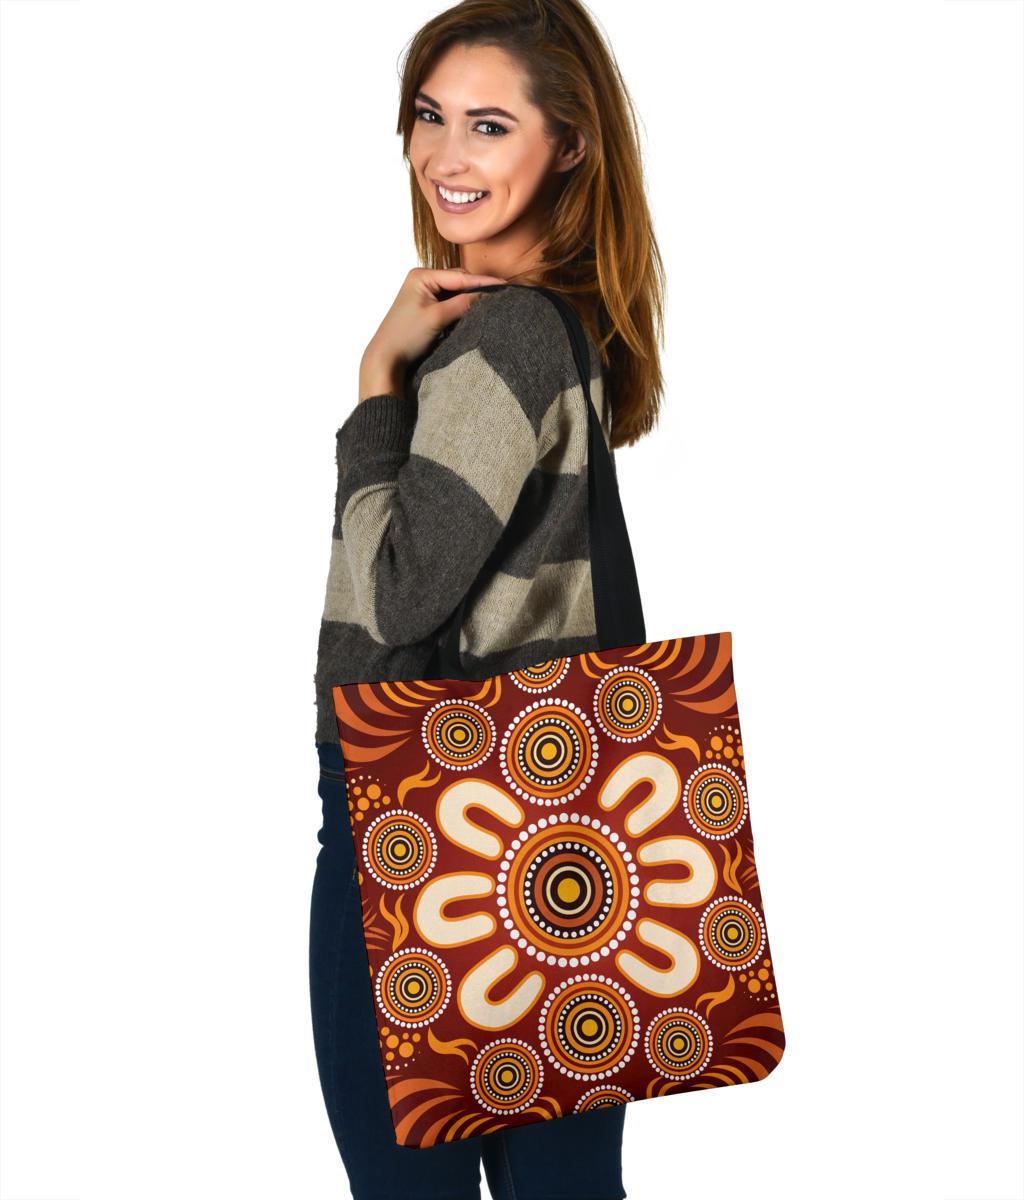 aboriginal-tote-bags-circle-flowers-patterns-ver02